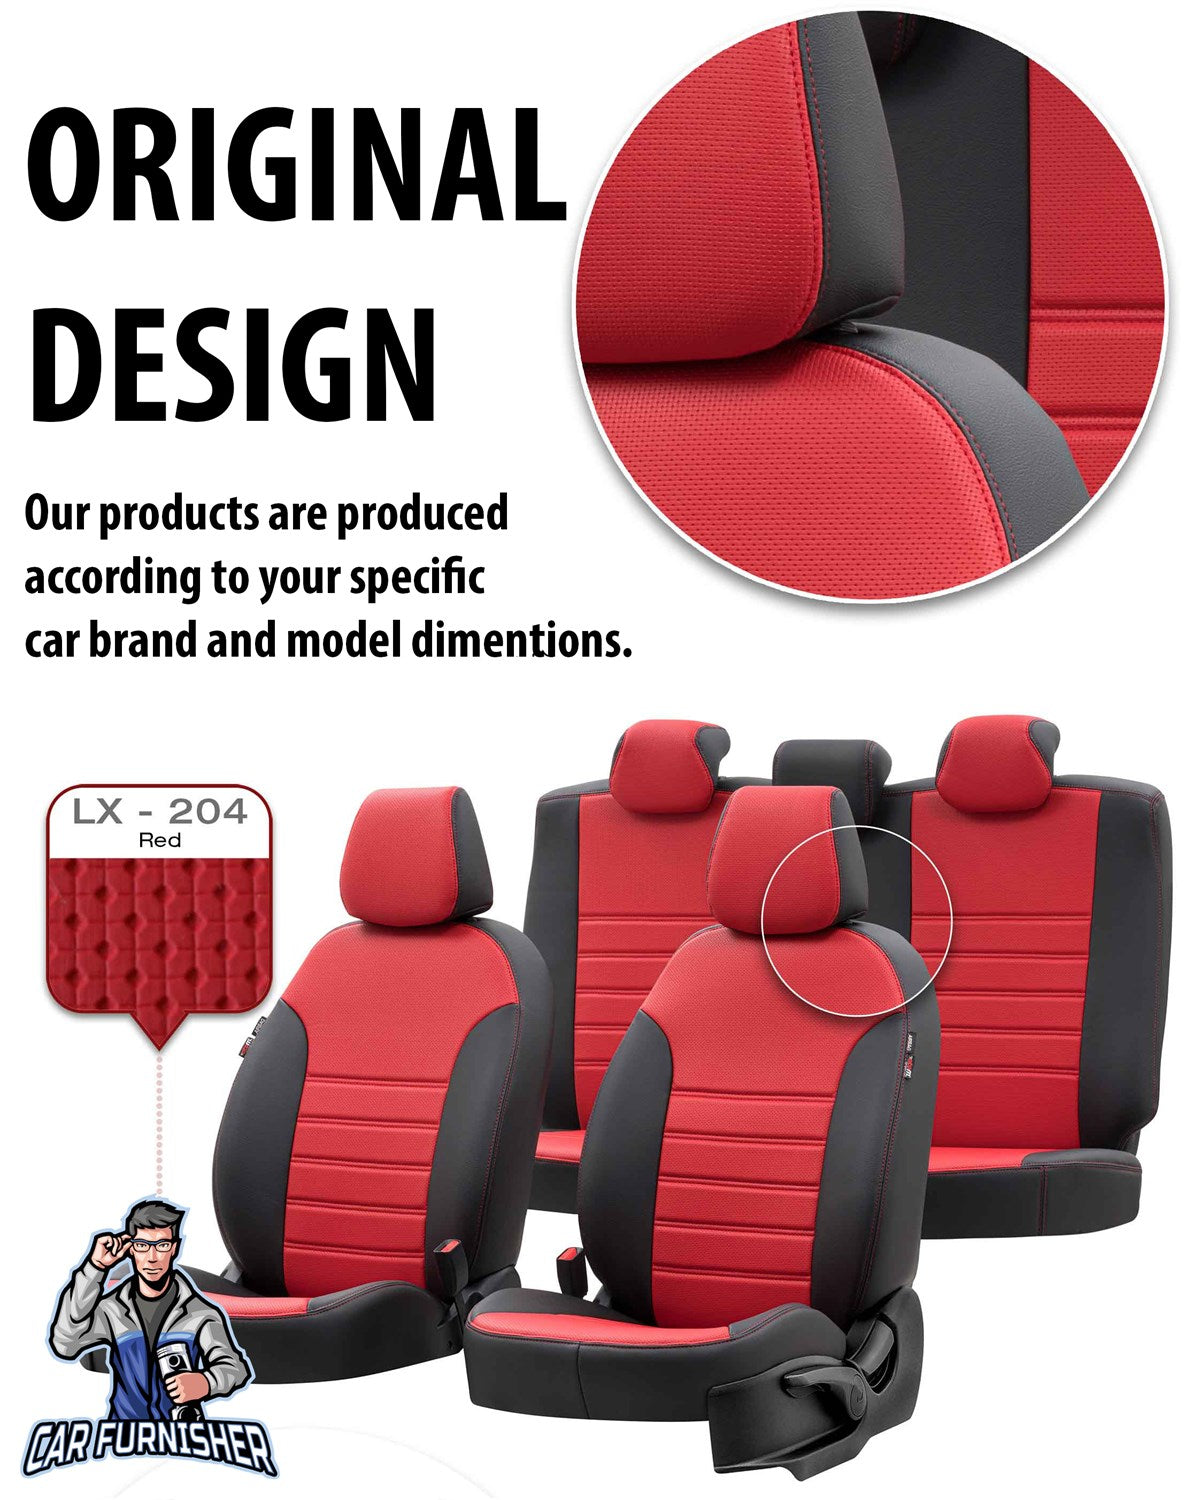 Renault Broadway Car Seat Covers 1983-2001 New York Design Black Full Set (5 Seats + Handrest) Leather & Fabric